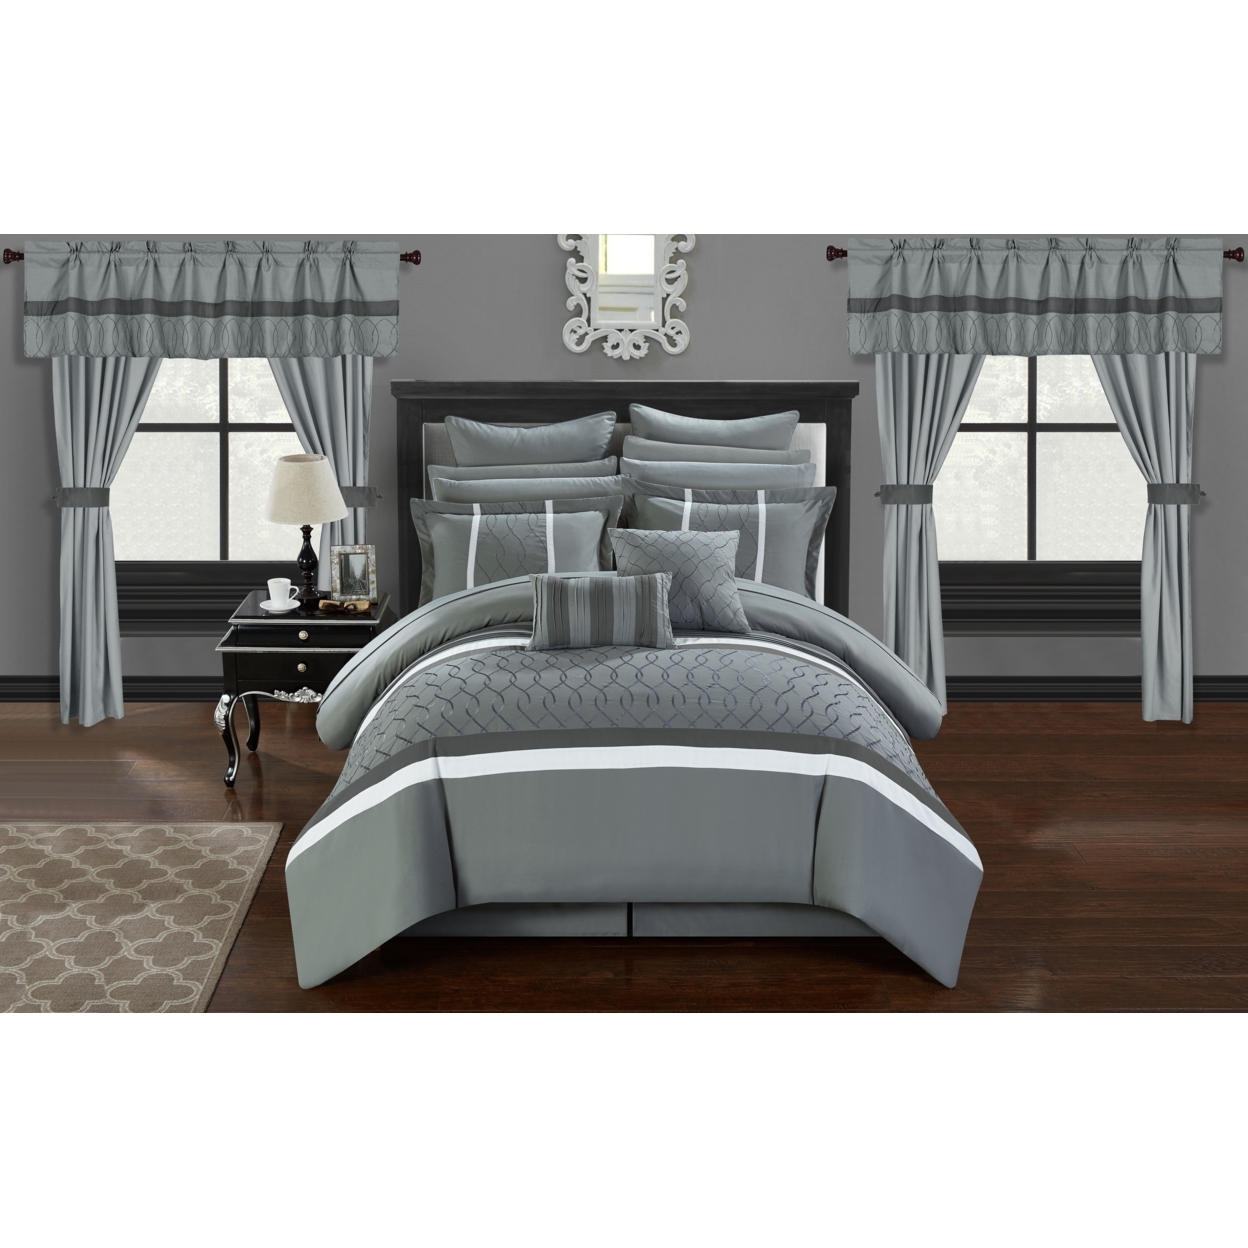 Topaz 24 Piece Comforter Bed In A Bag Pleated Ruffled Designer Embellished Bedding Set - Gray, King